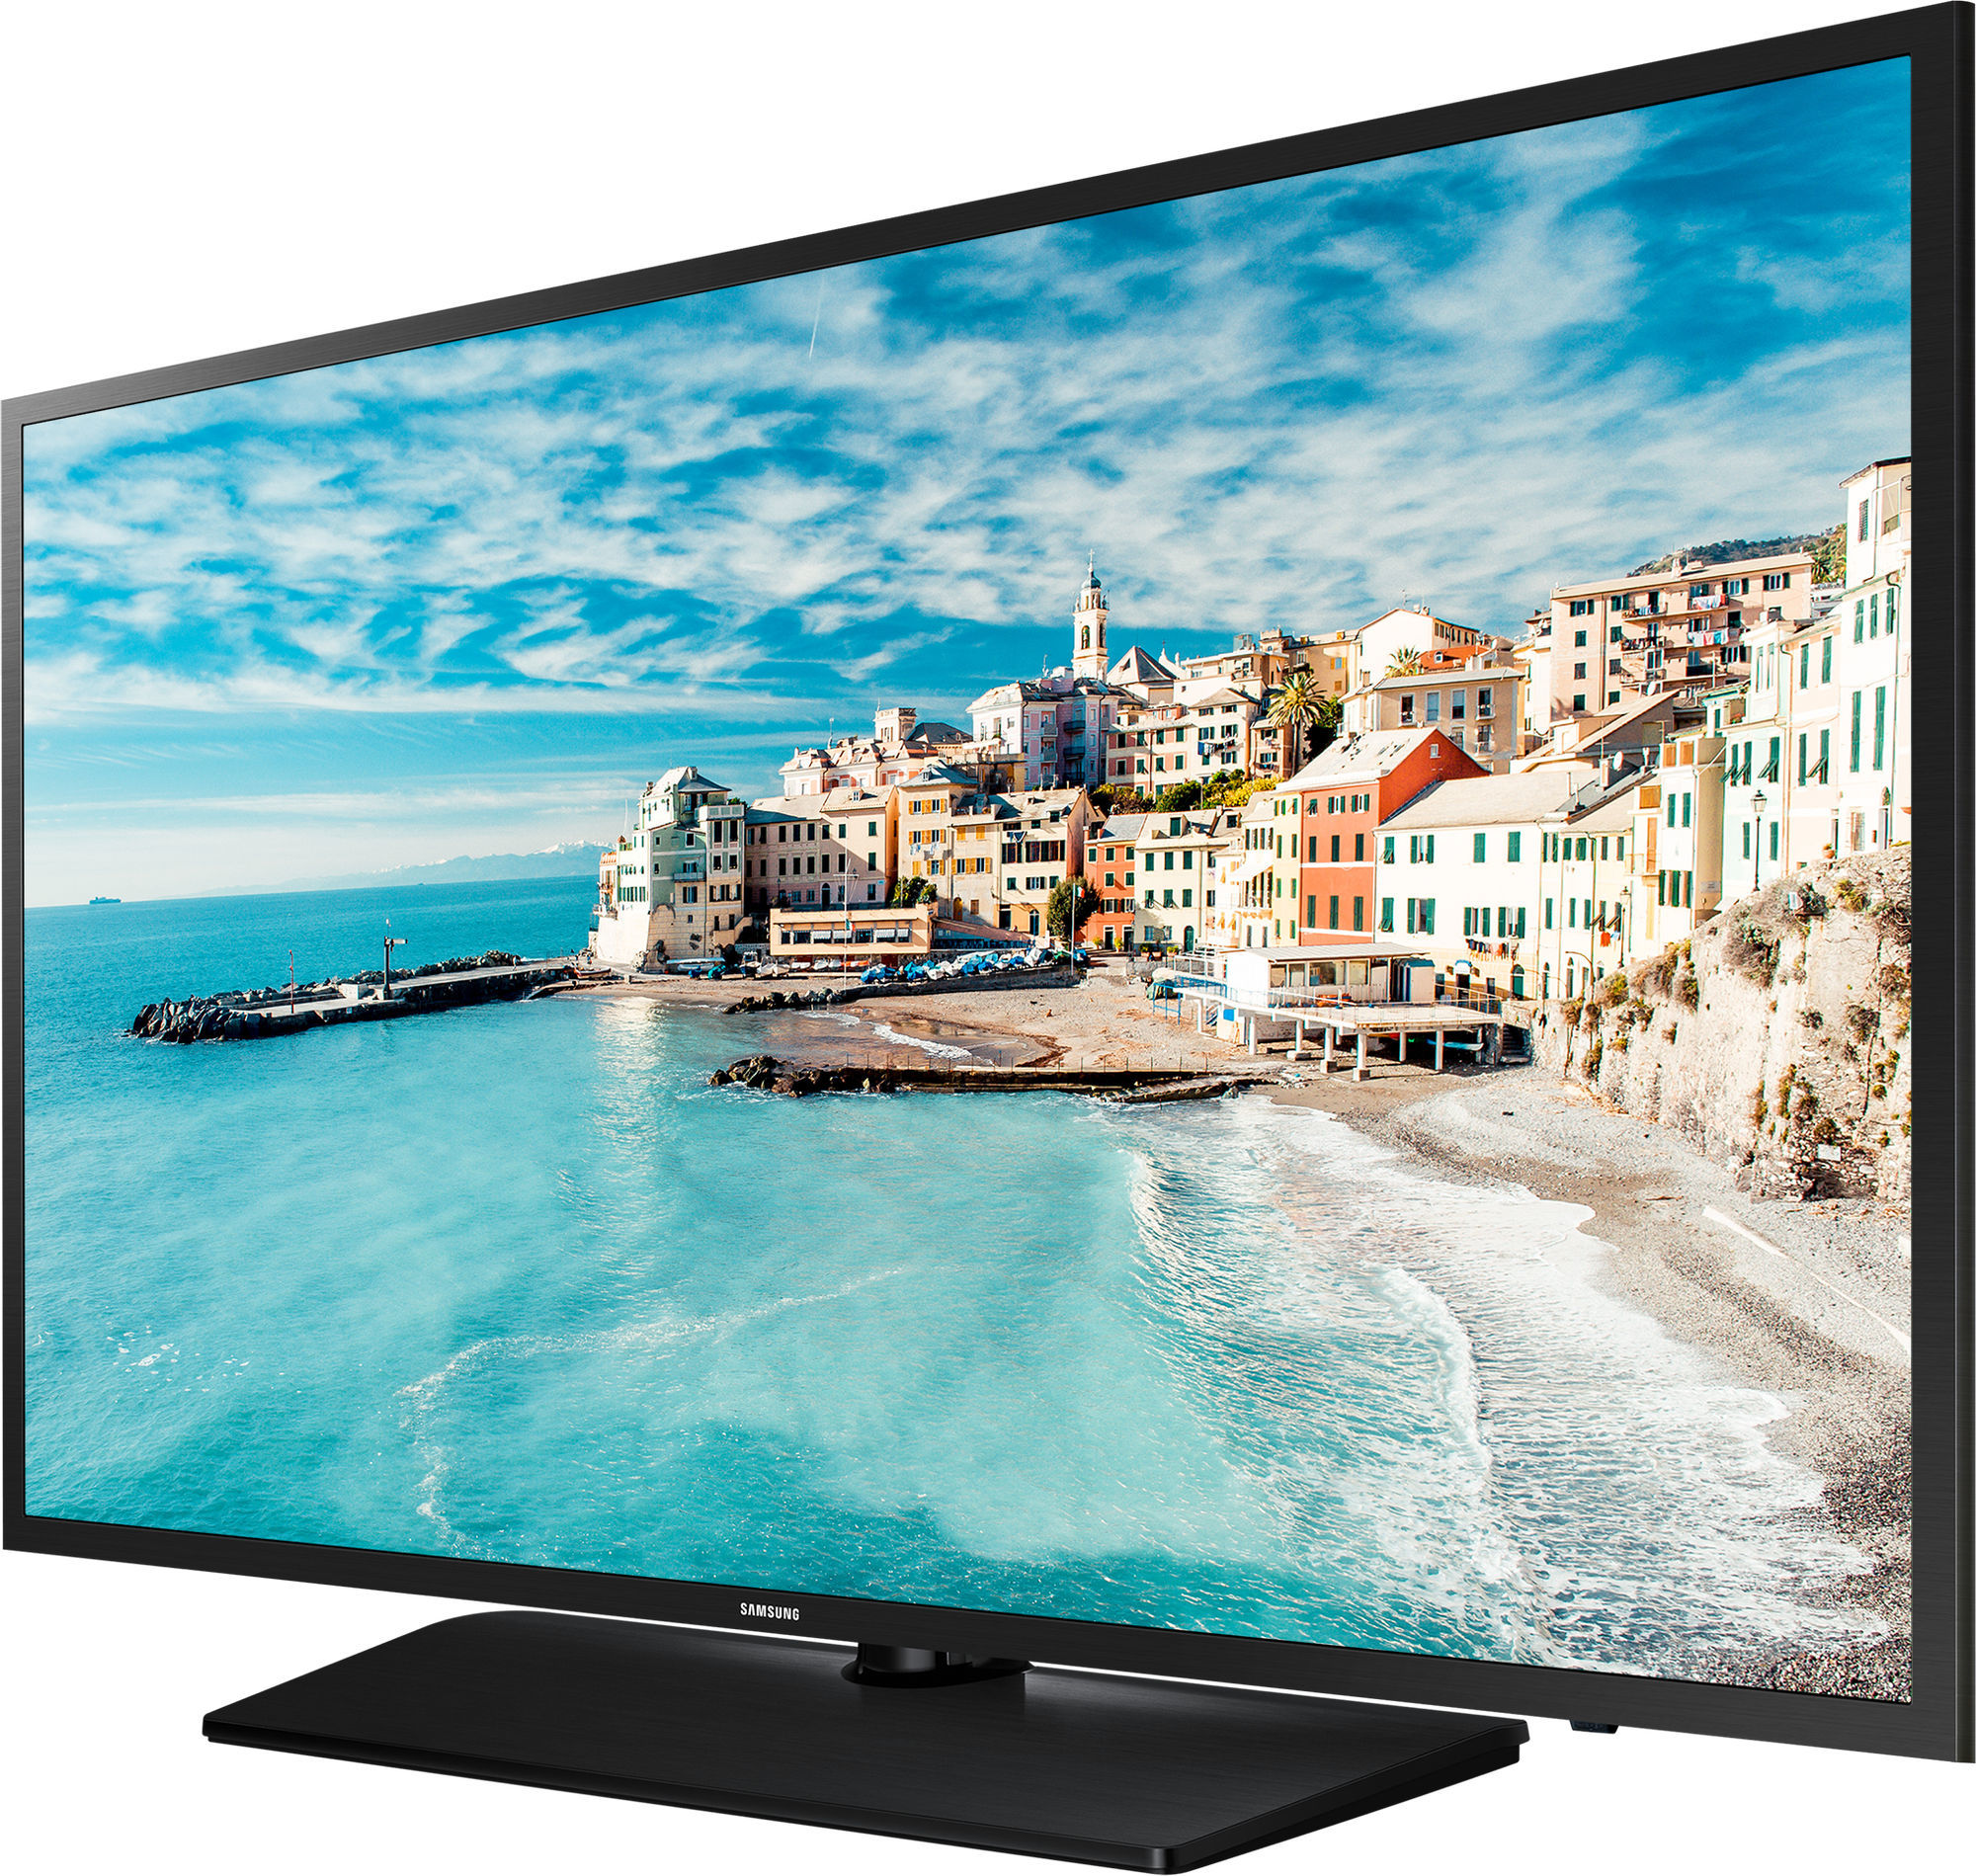 М видео купить телевизор 32. Телевизор Samsung 32n4500. Телевизор самсунг 32n 5000. Телевизор Samsung 32n4000. Самсунг 32.d20yb.